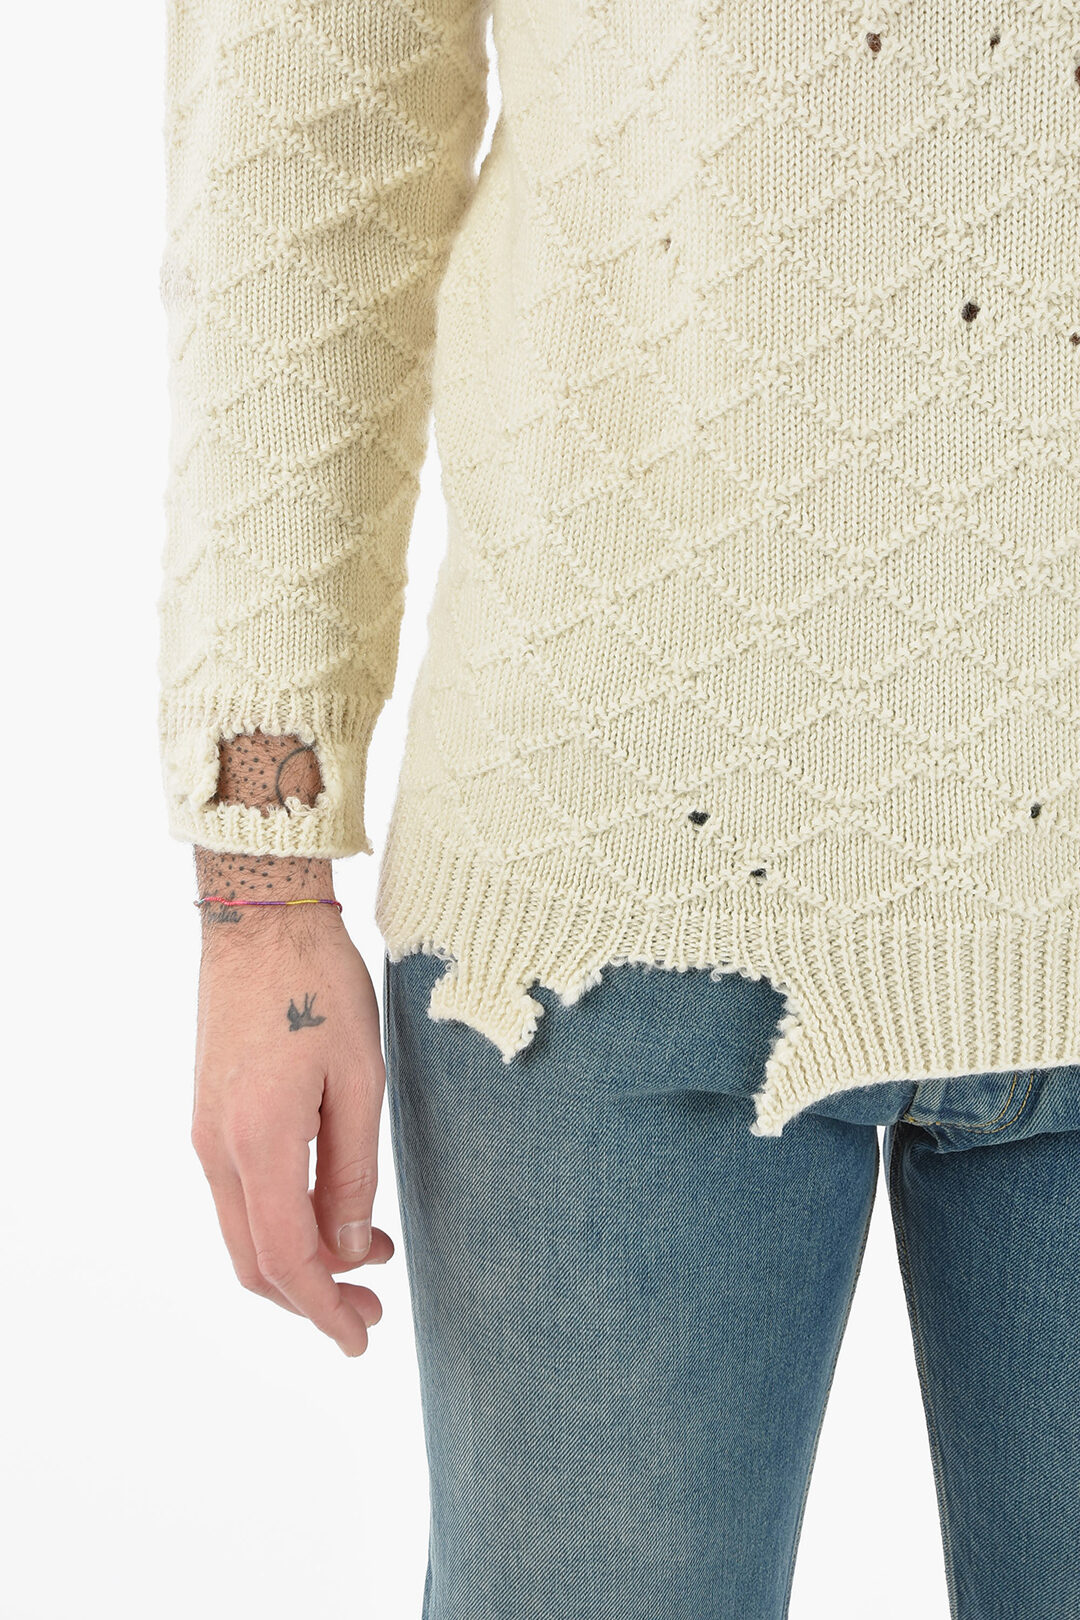 Men's Argyle jacquard Full Zip Sweater 